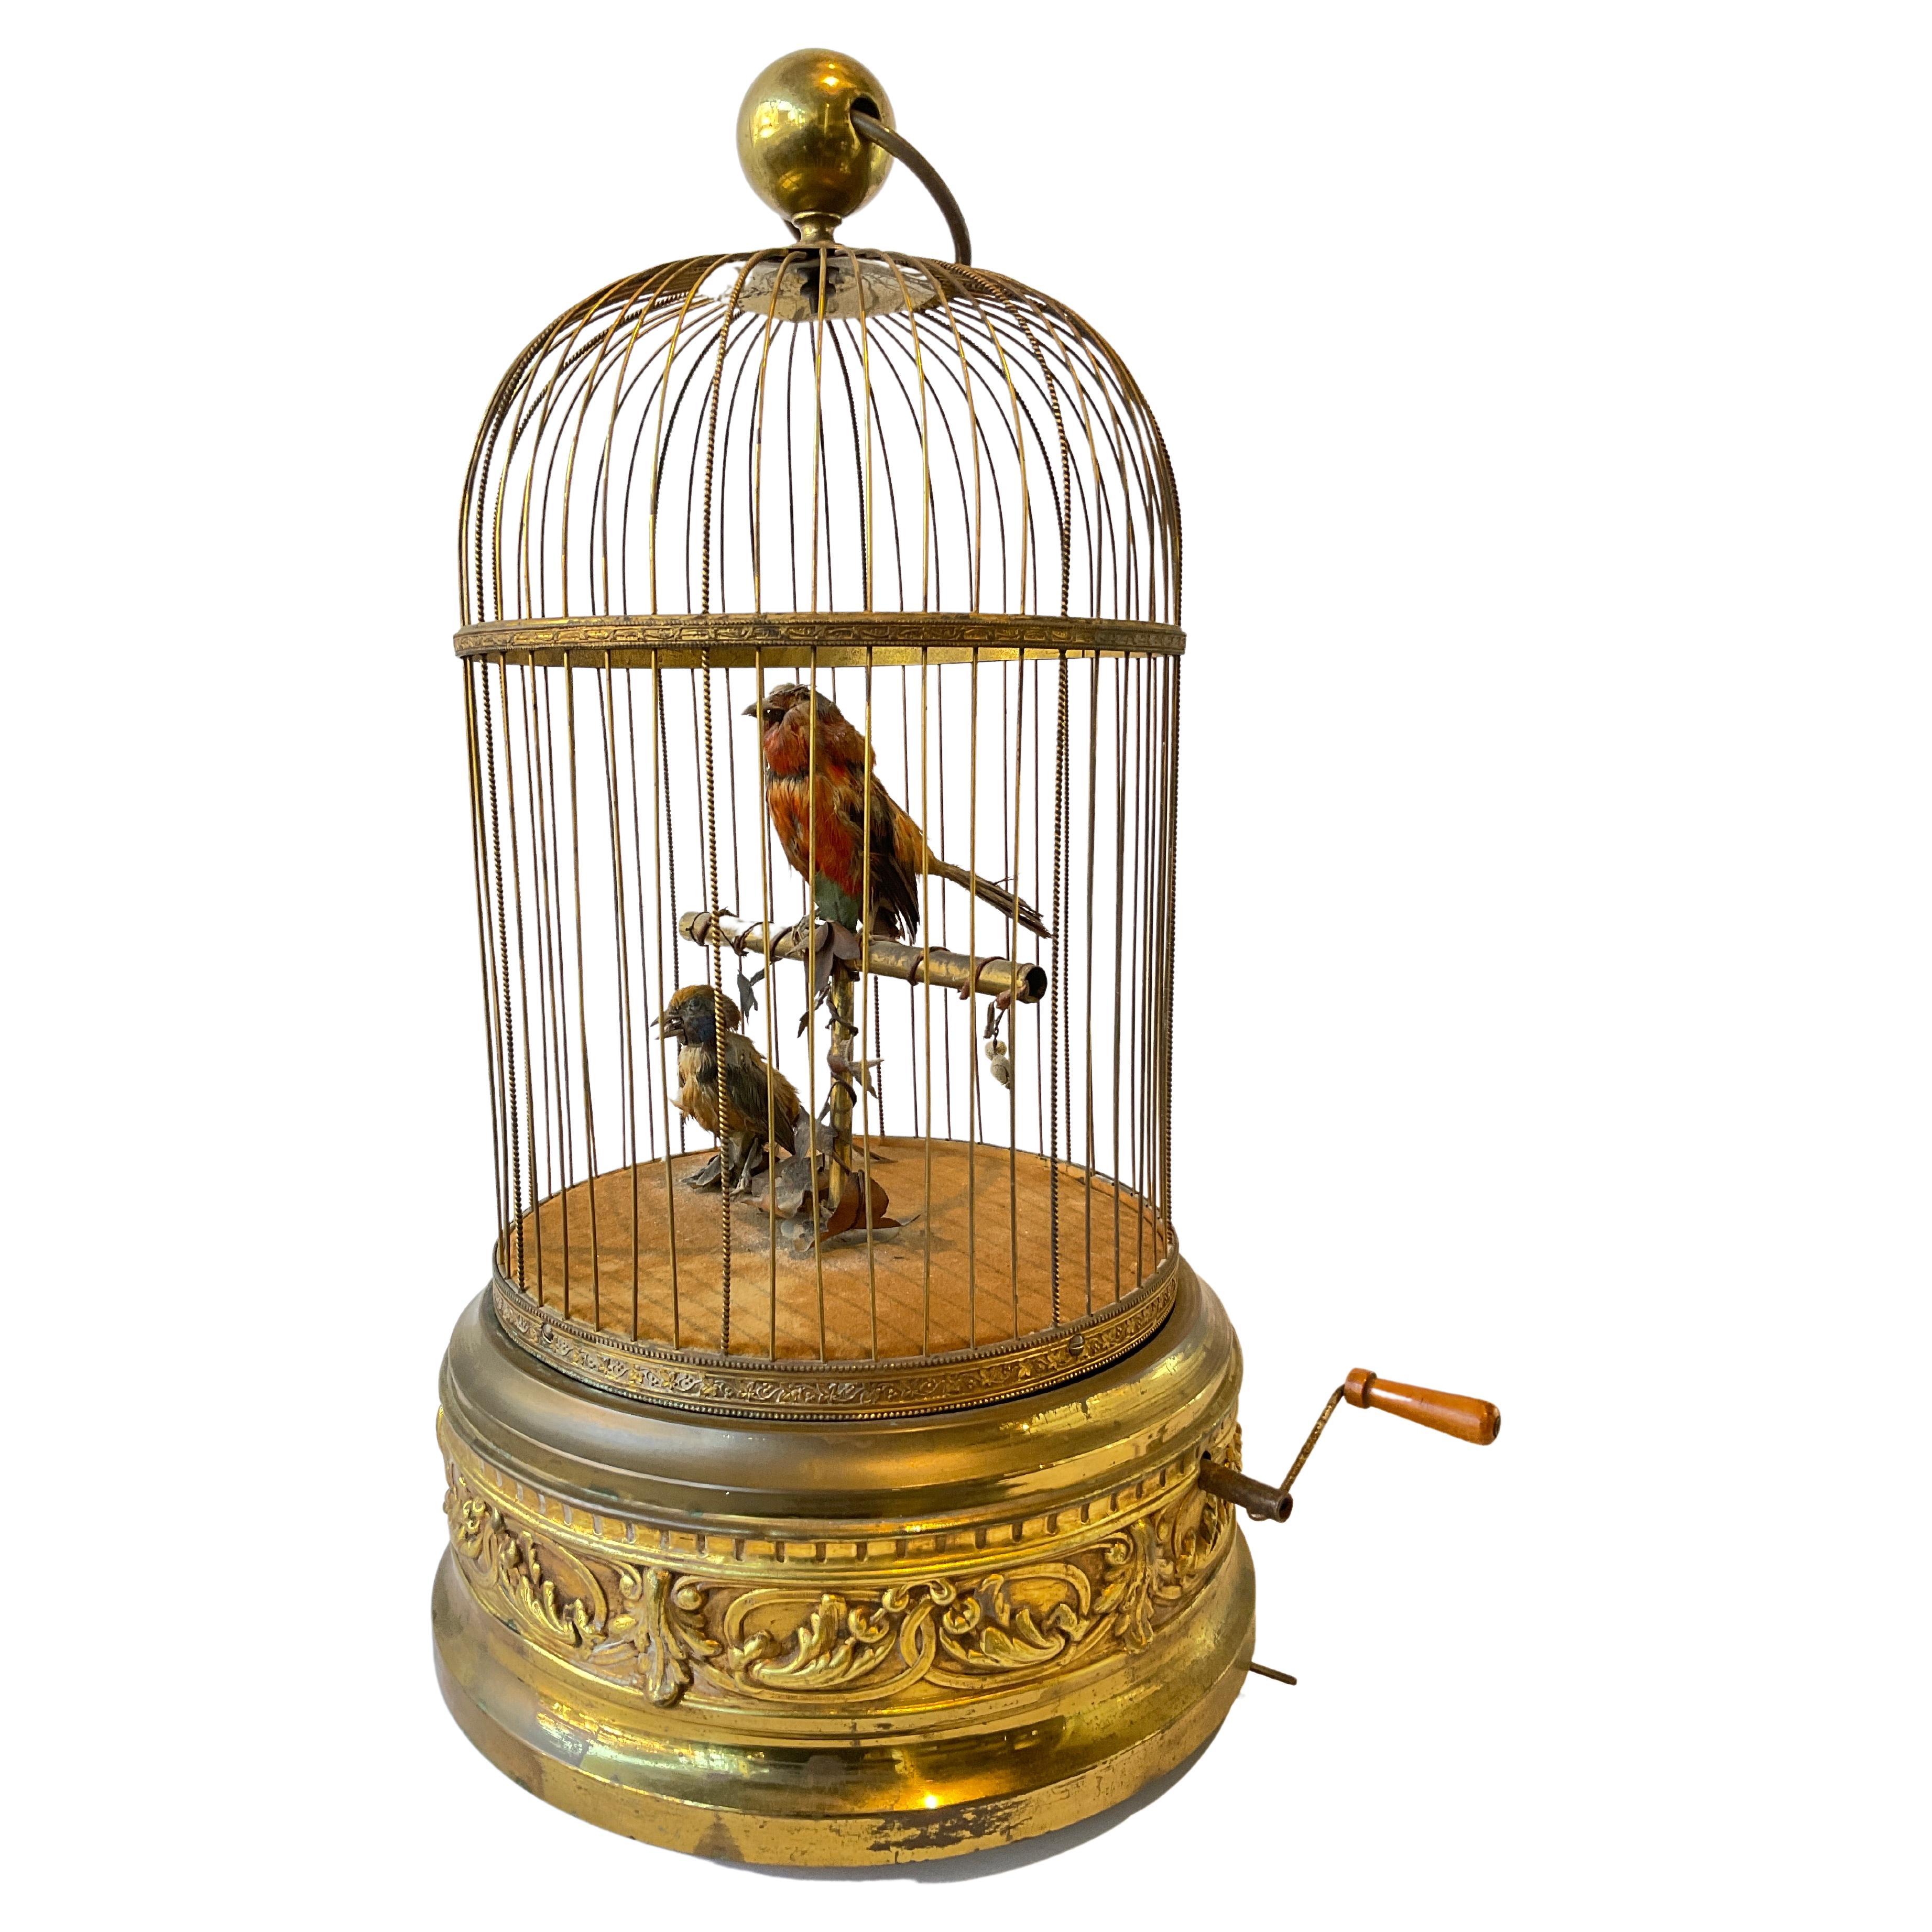 1915, French Automaton Singing Birds in Birdcage